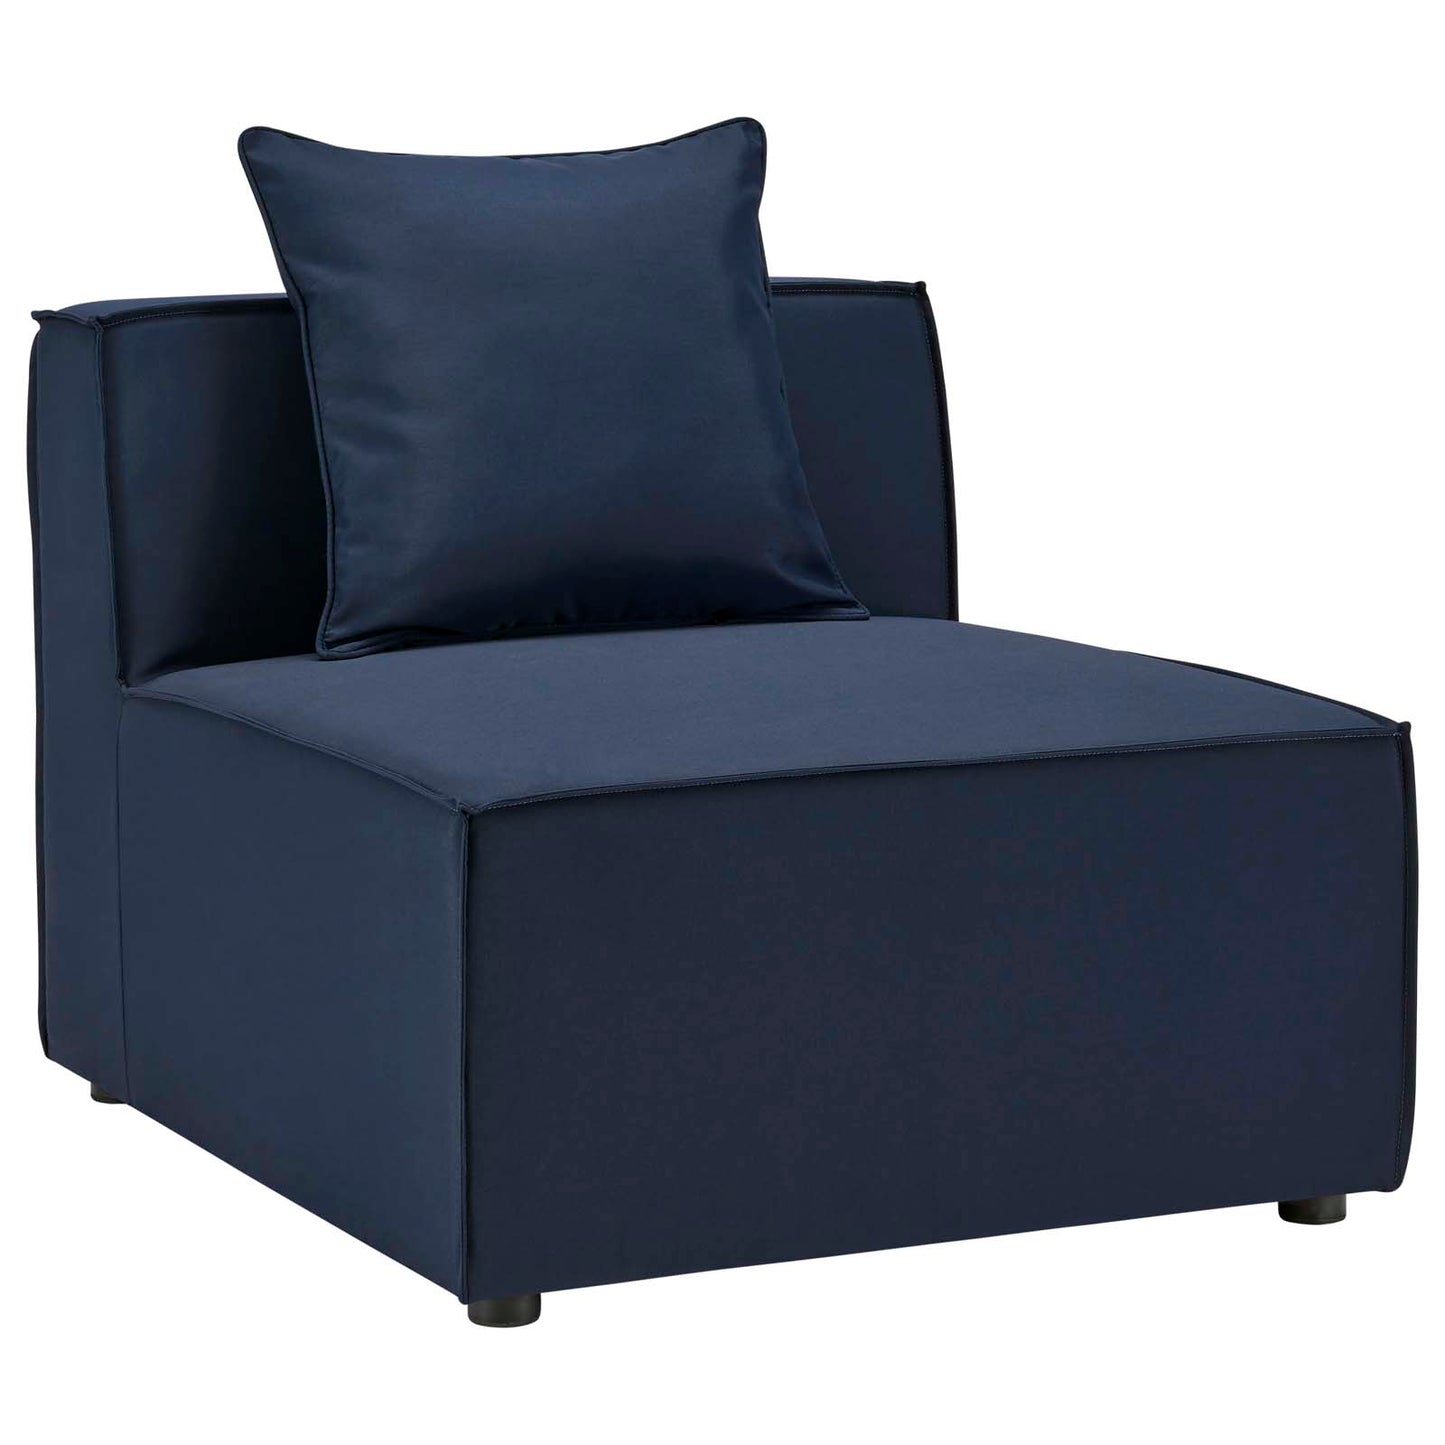 Saybrook Outdoor Patio Upholstered 5-Piece Sectional Sofa Navy EEI-4384-NAV